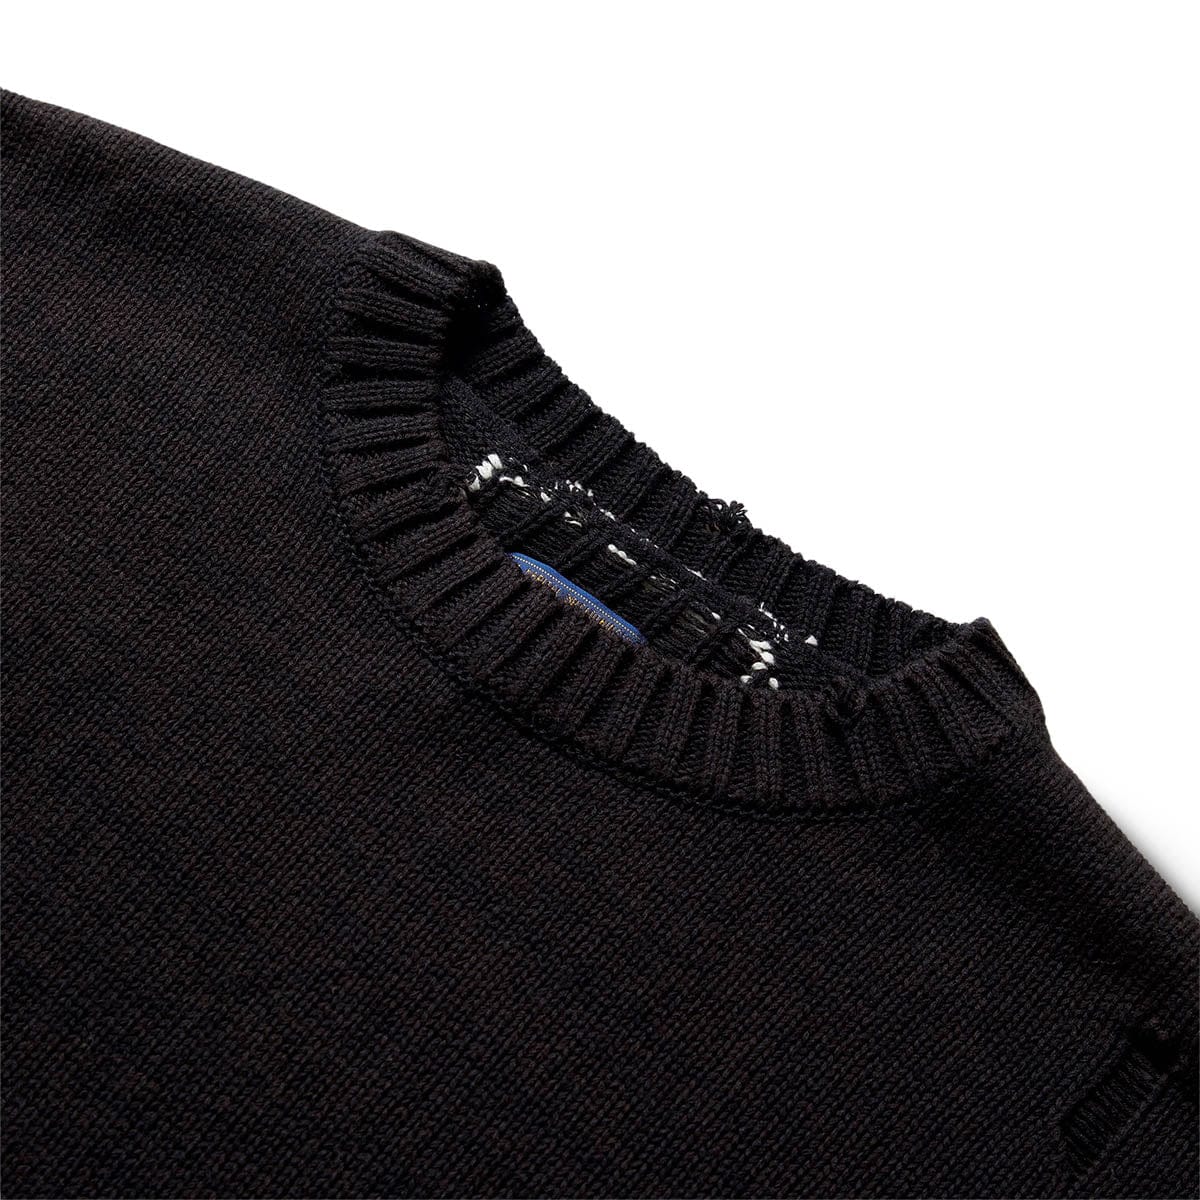 Kapital Knitwear 5G COTTON KNIT BONE CREW SWEATER